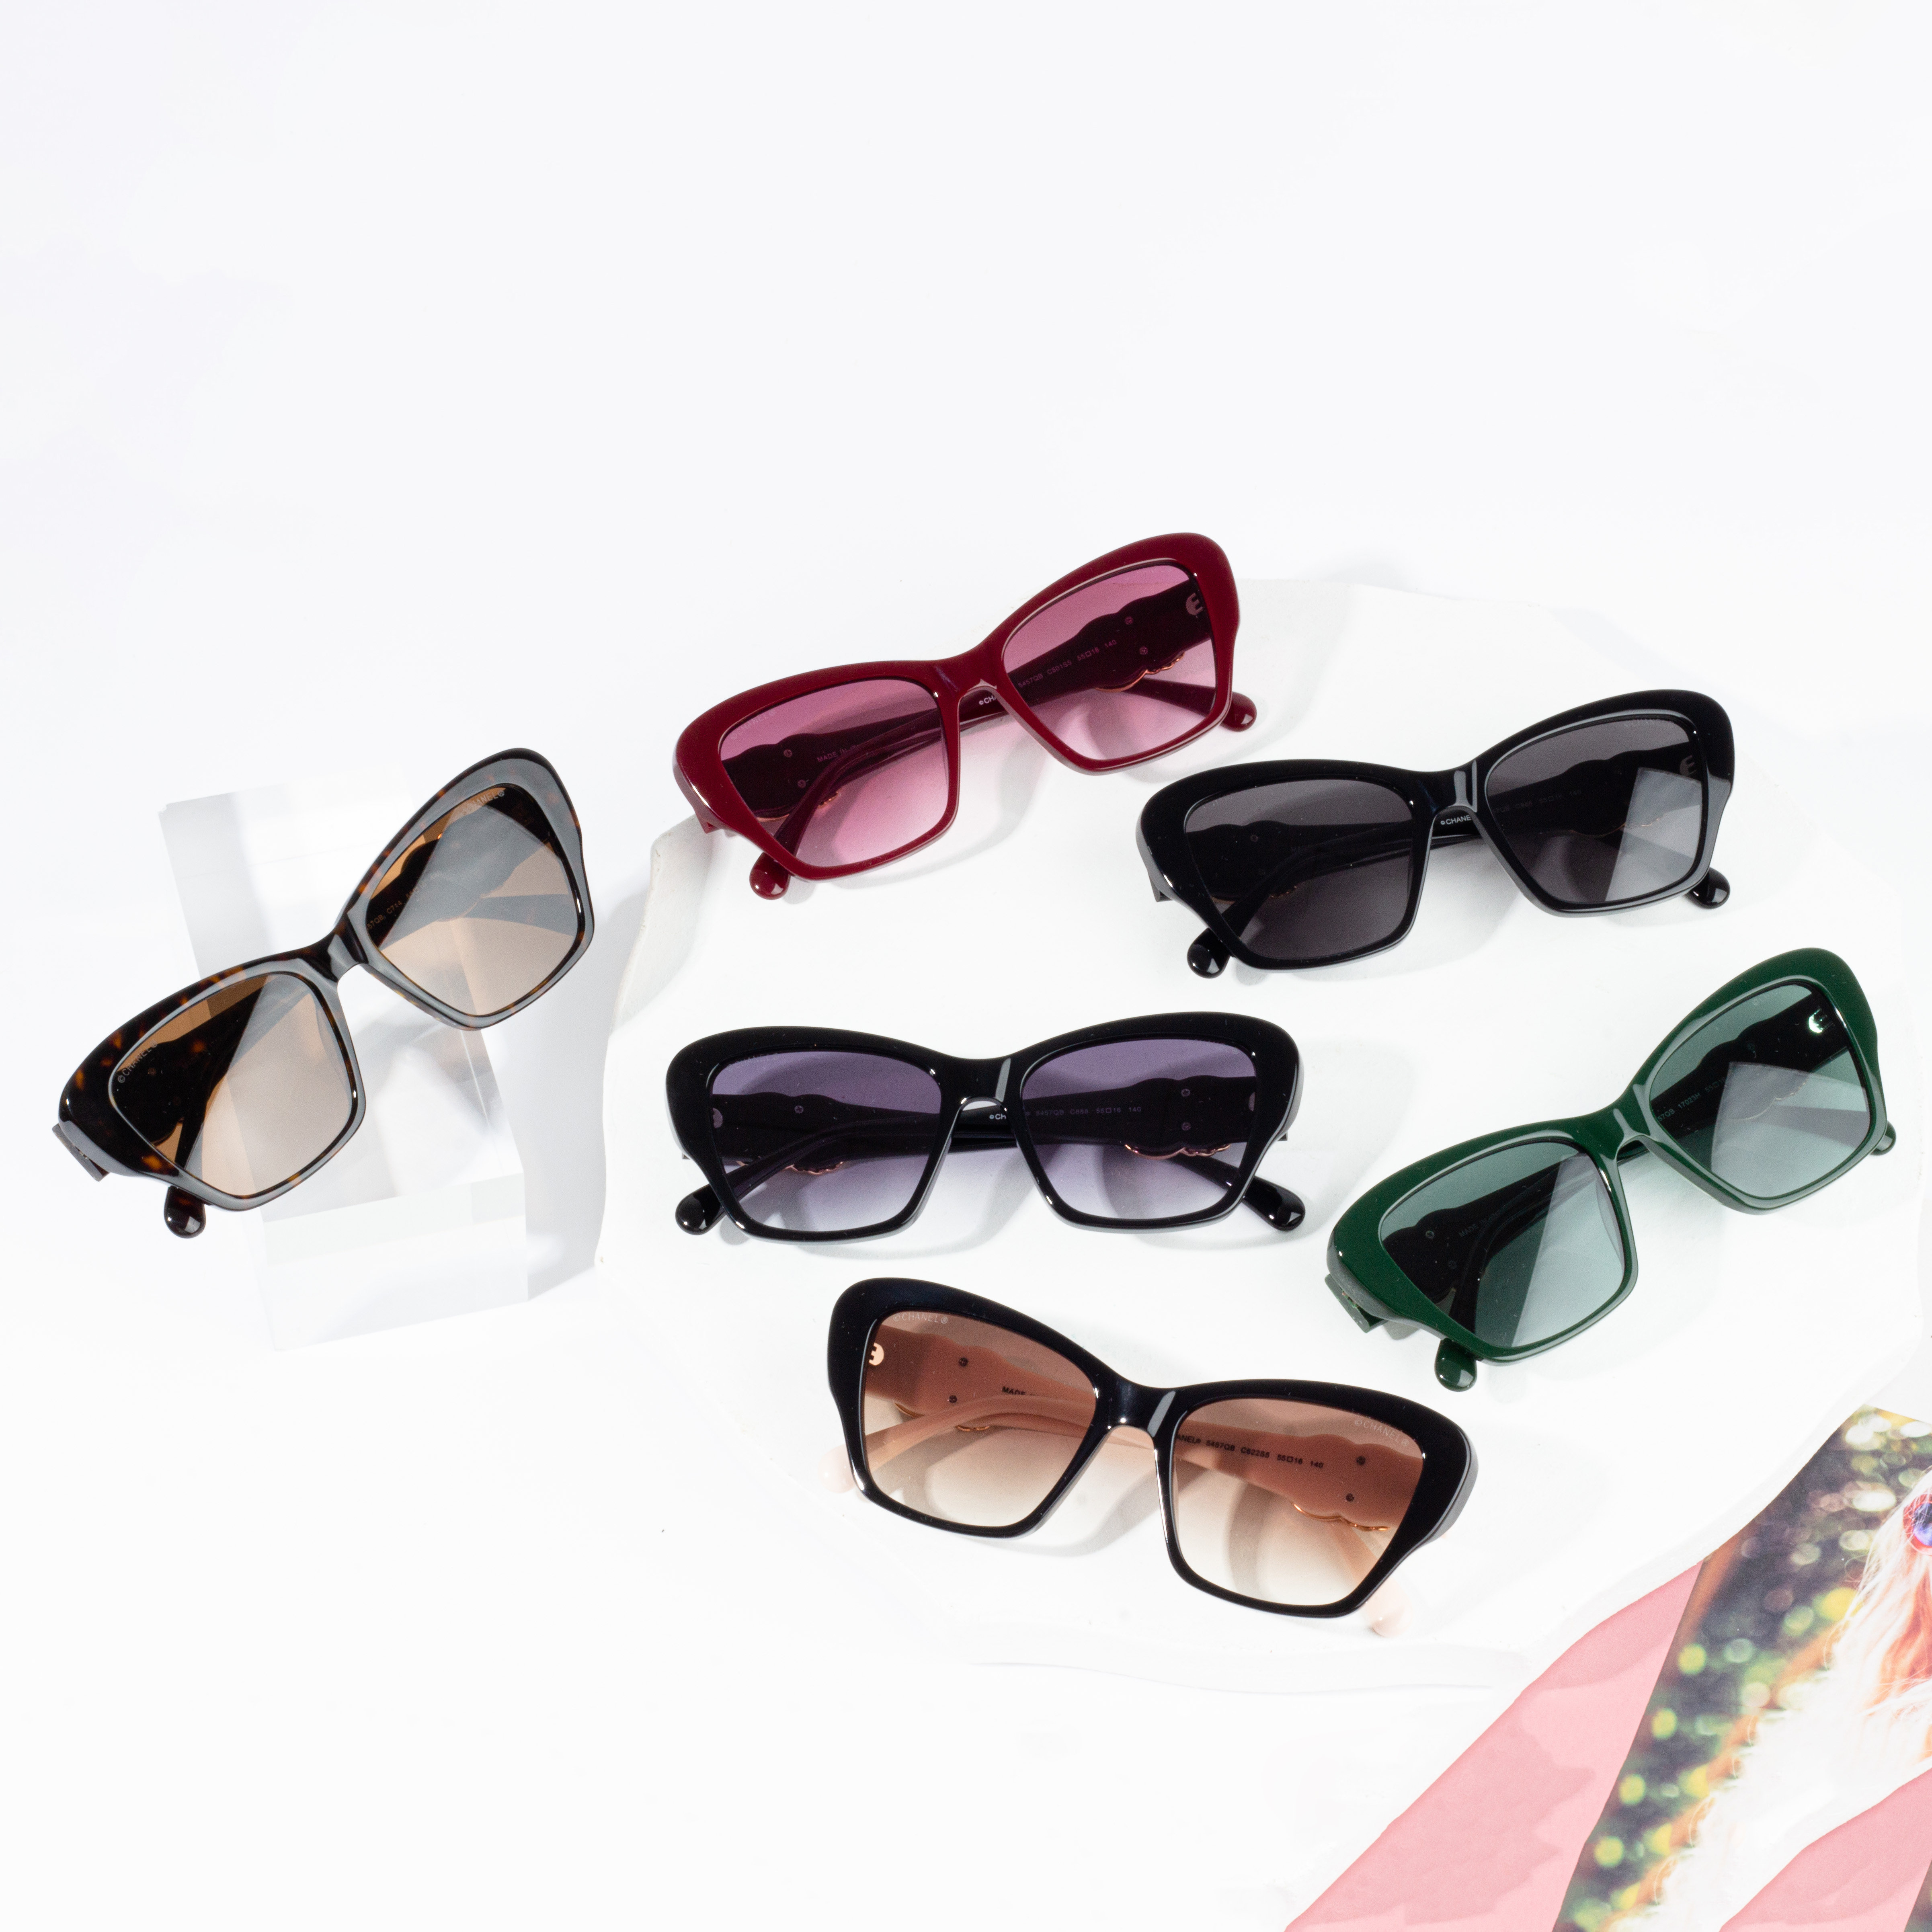 PriceList for Oakley Kids Sunglasses - UV 400 Protection Lady Sunglasses Promotion – HJ EYEWEAR